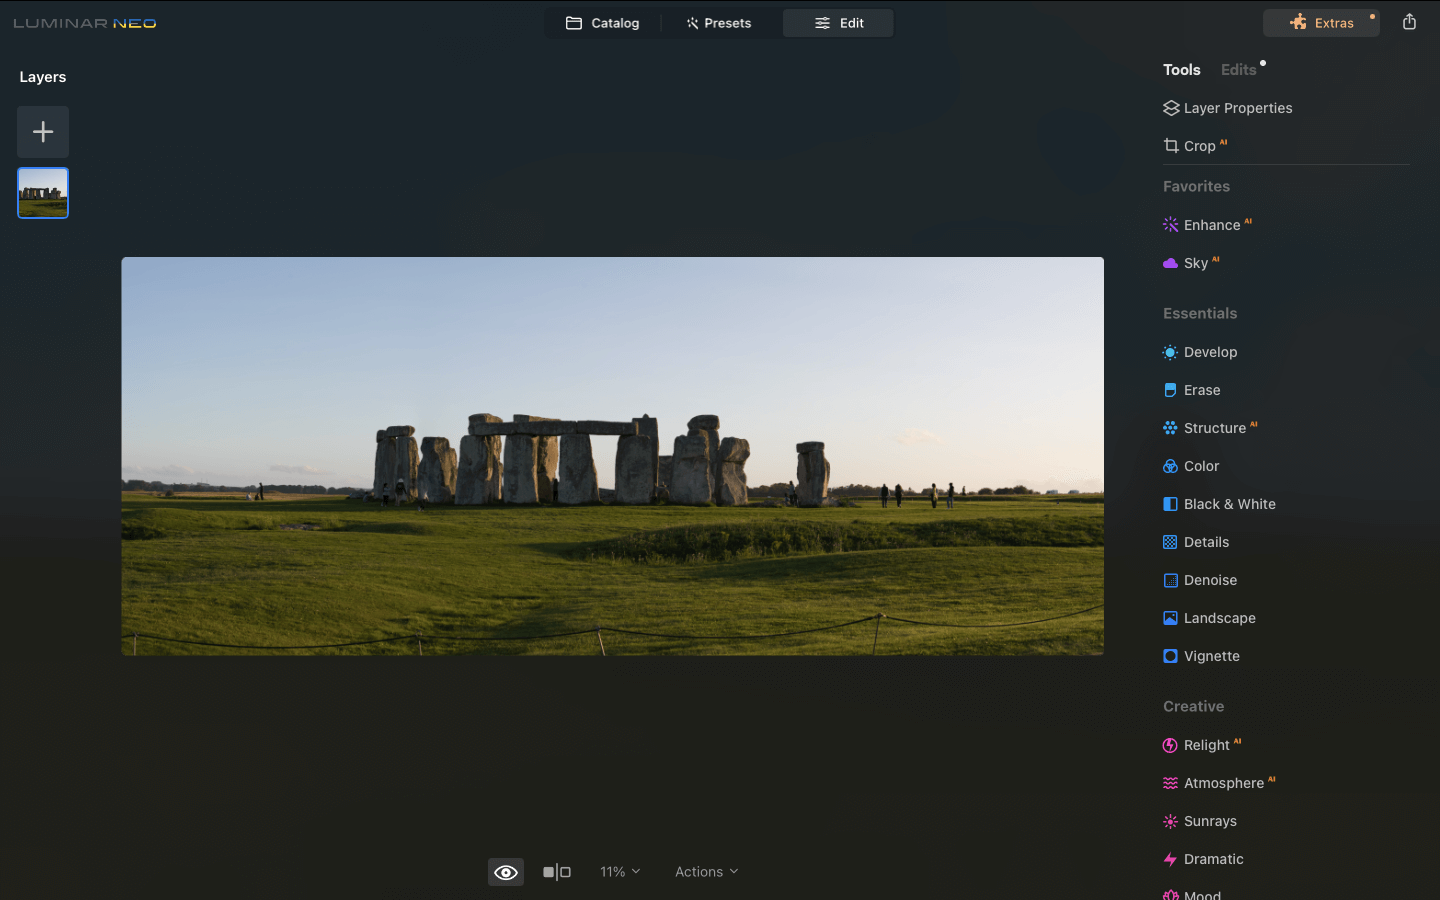 Stonehenge Panorama by RGWords Before Editing